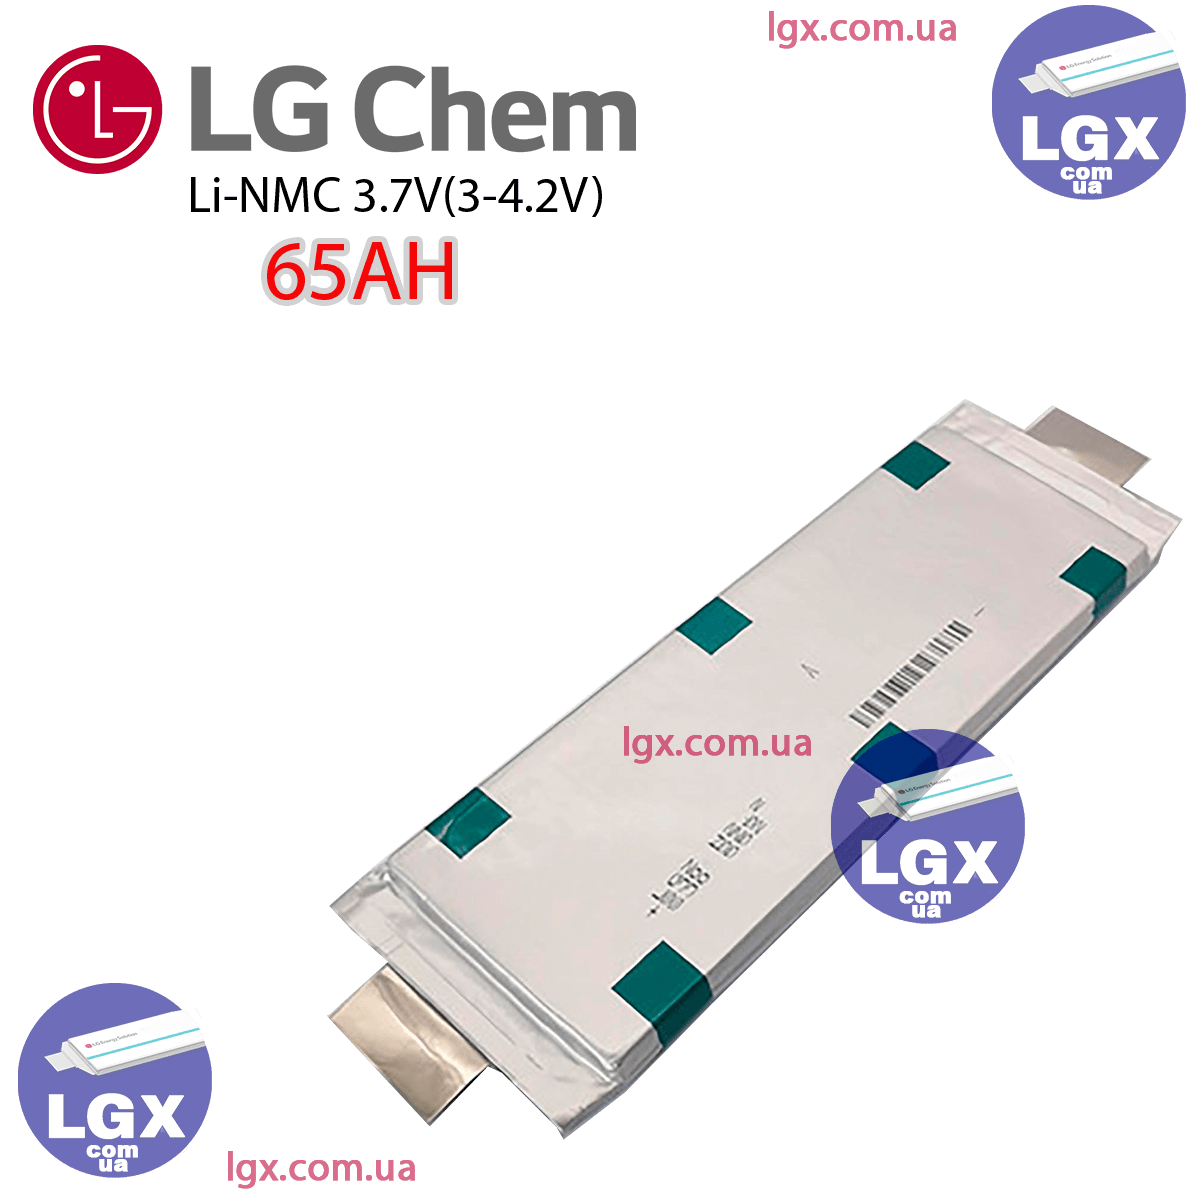 Аккумуляторный елемент LG-Chem LGX-e65 химия NMC 3.6v (пакет) емкость 65А/Ч разряд 3-5c 2000 циклов 890грам